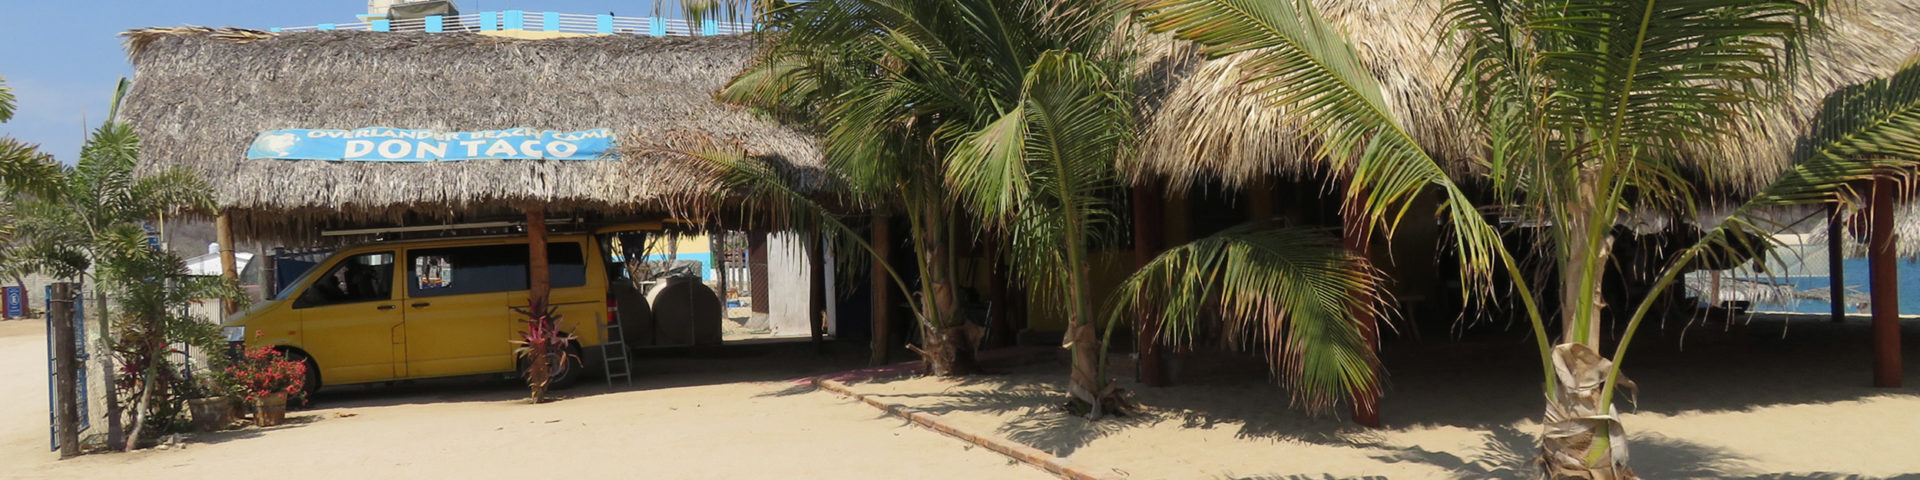 Don Taco Overland Camping, Bahia San Agustin, Huatulco, Oax.